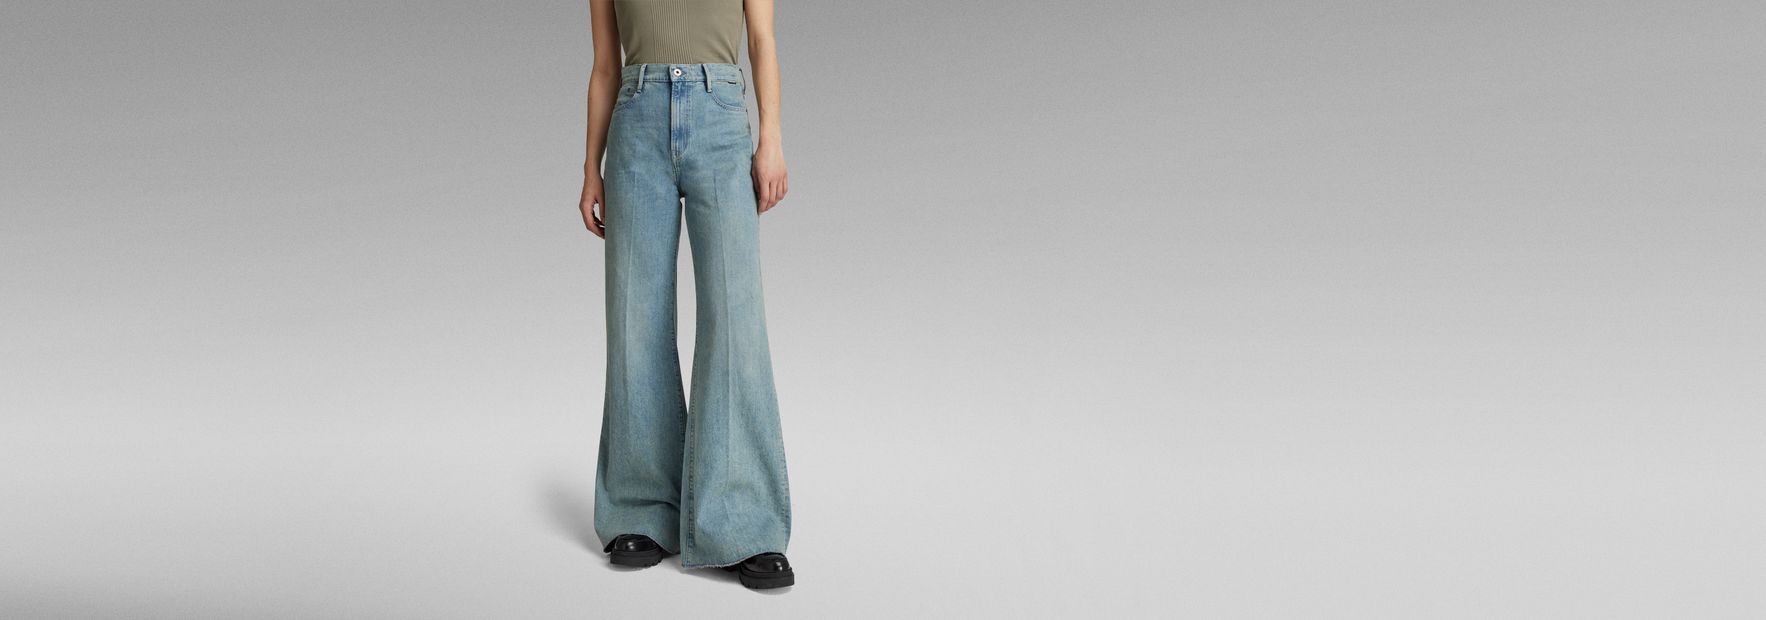 Wide Ultra High Jeans - Light denim blue - Ladies